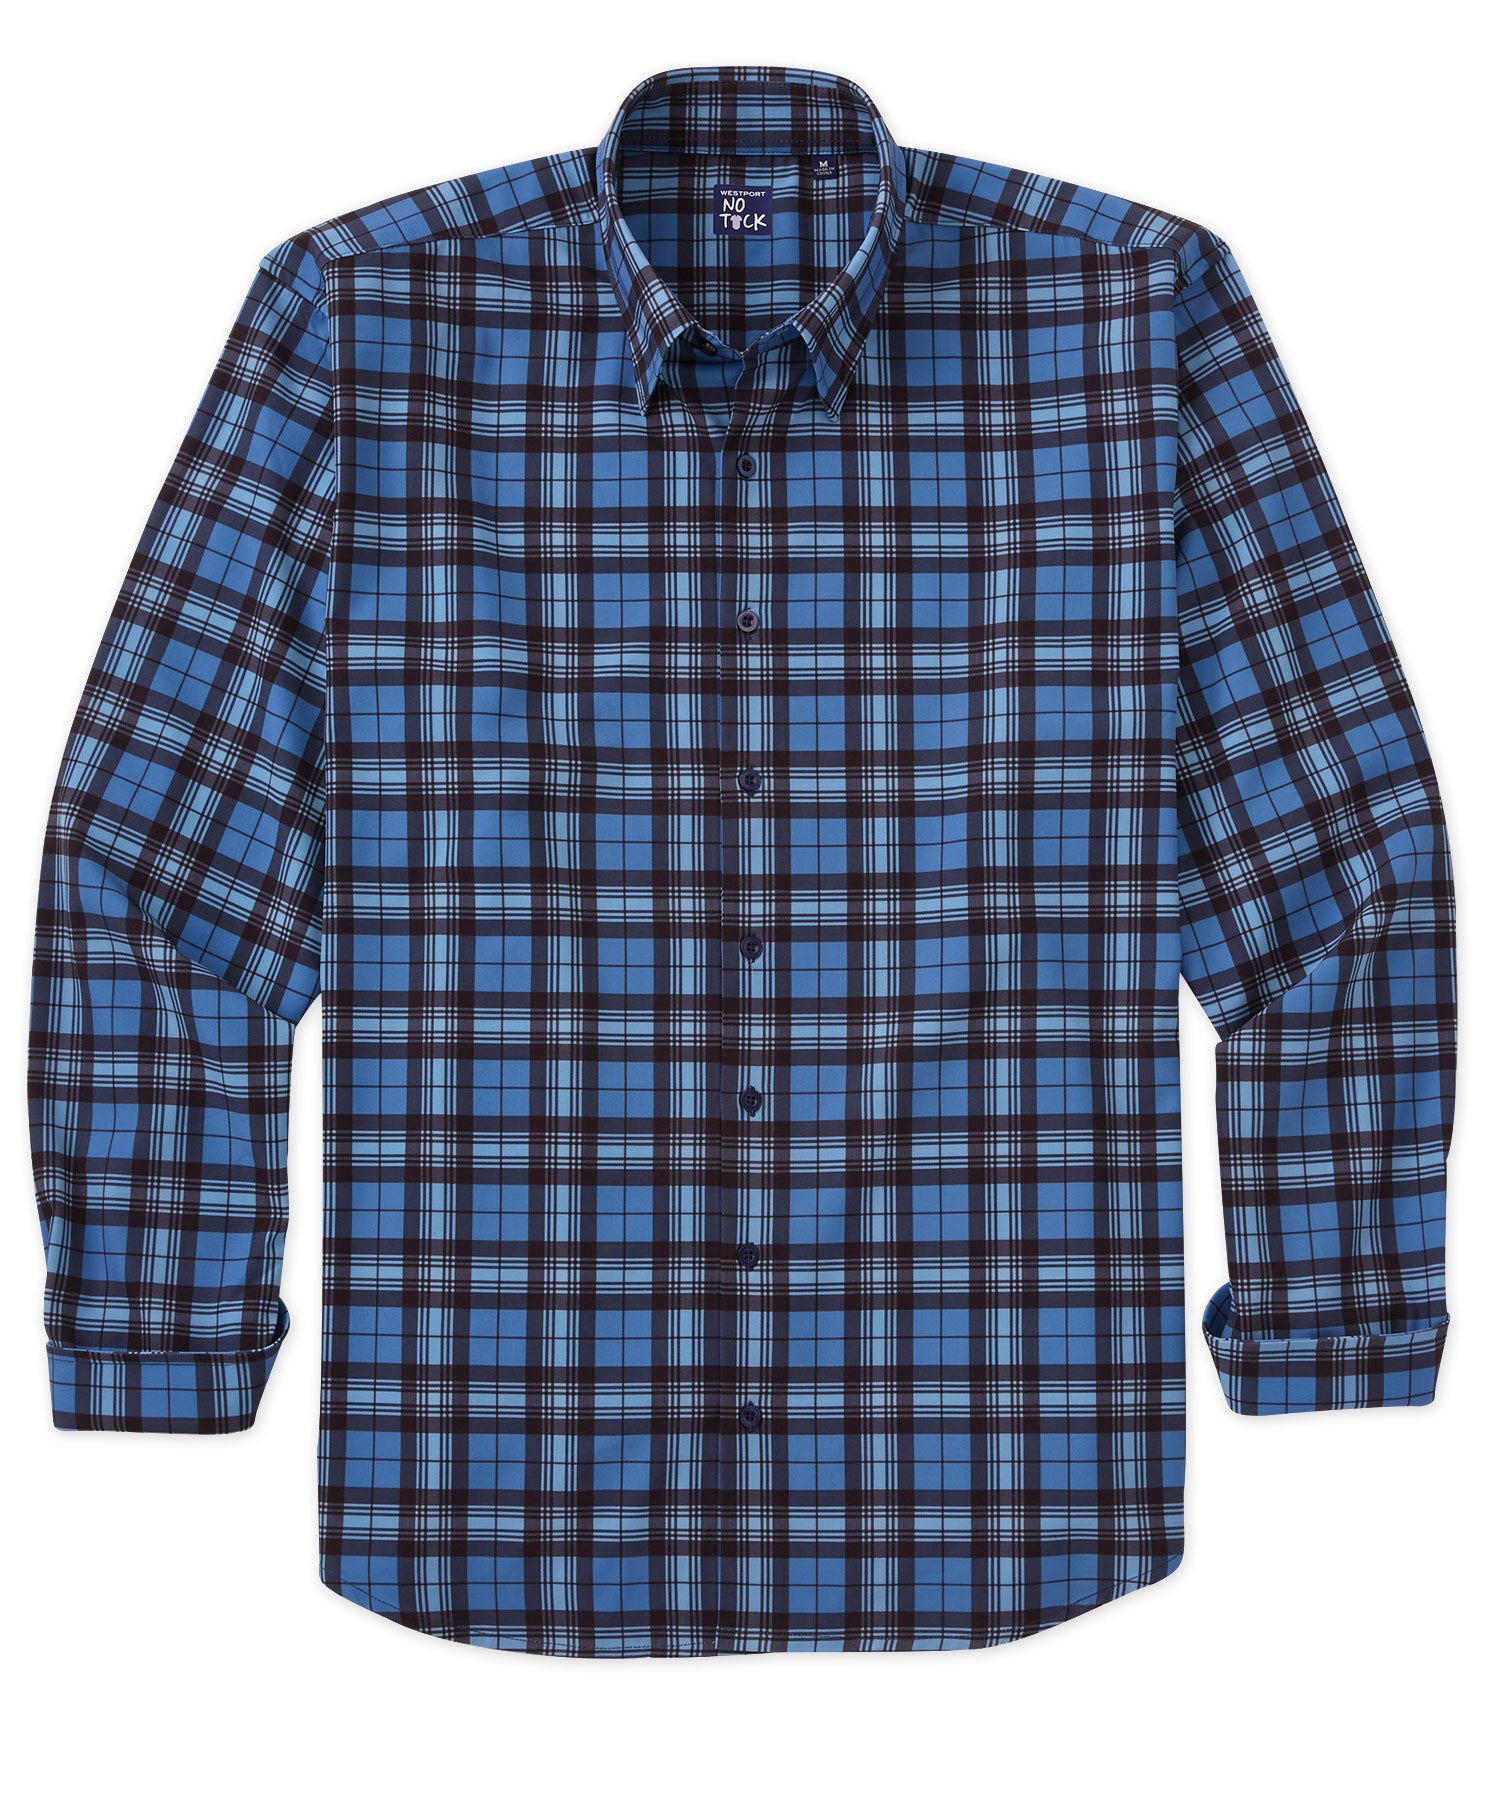 Plus Size 4XL-M Luxury Print Long Sleeve Plaid Shirt For Men